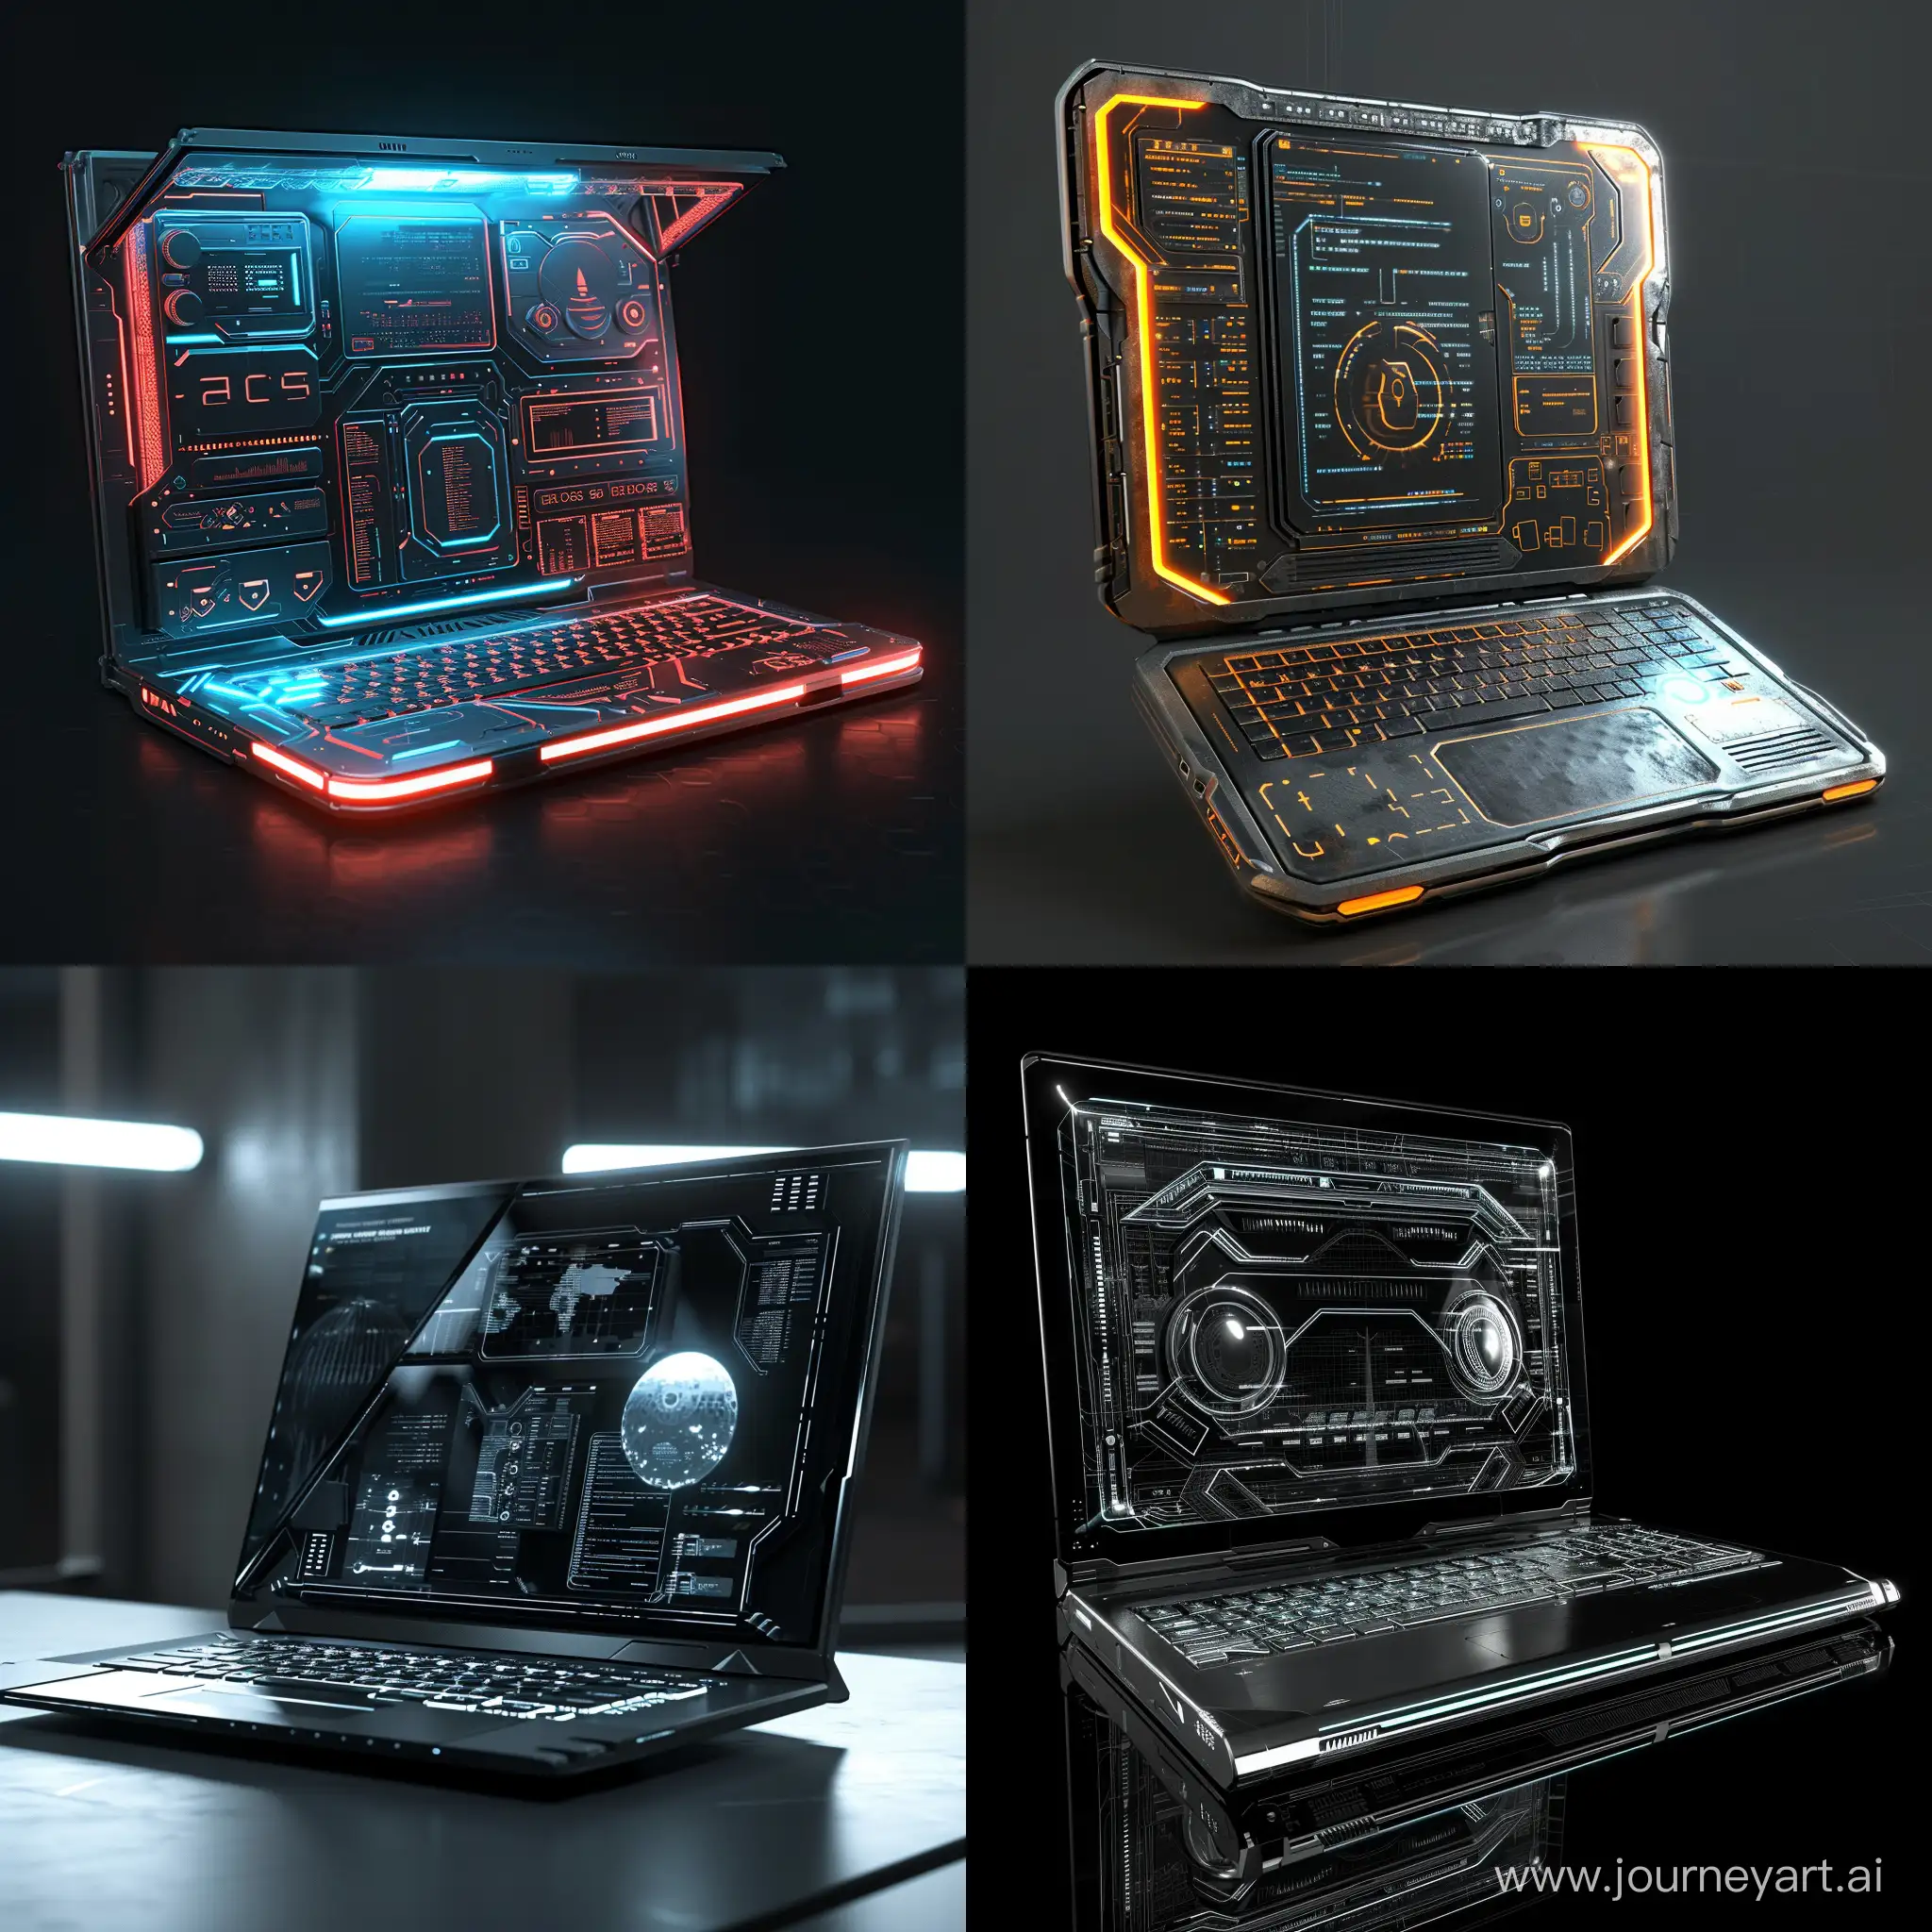 Futuristic laptop, in photorealistic artistic style